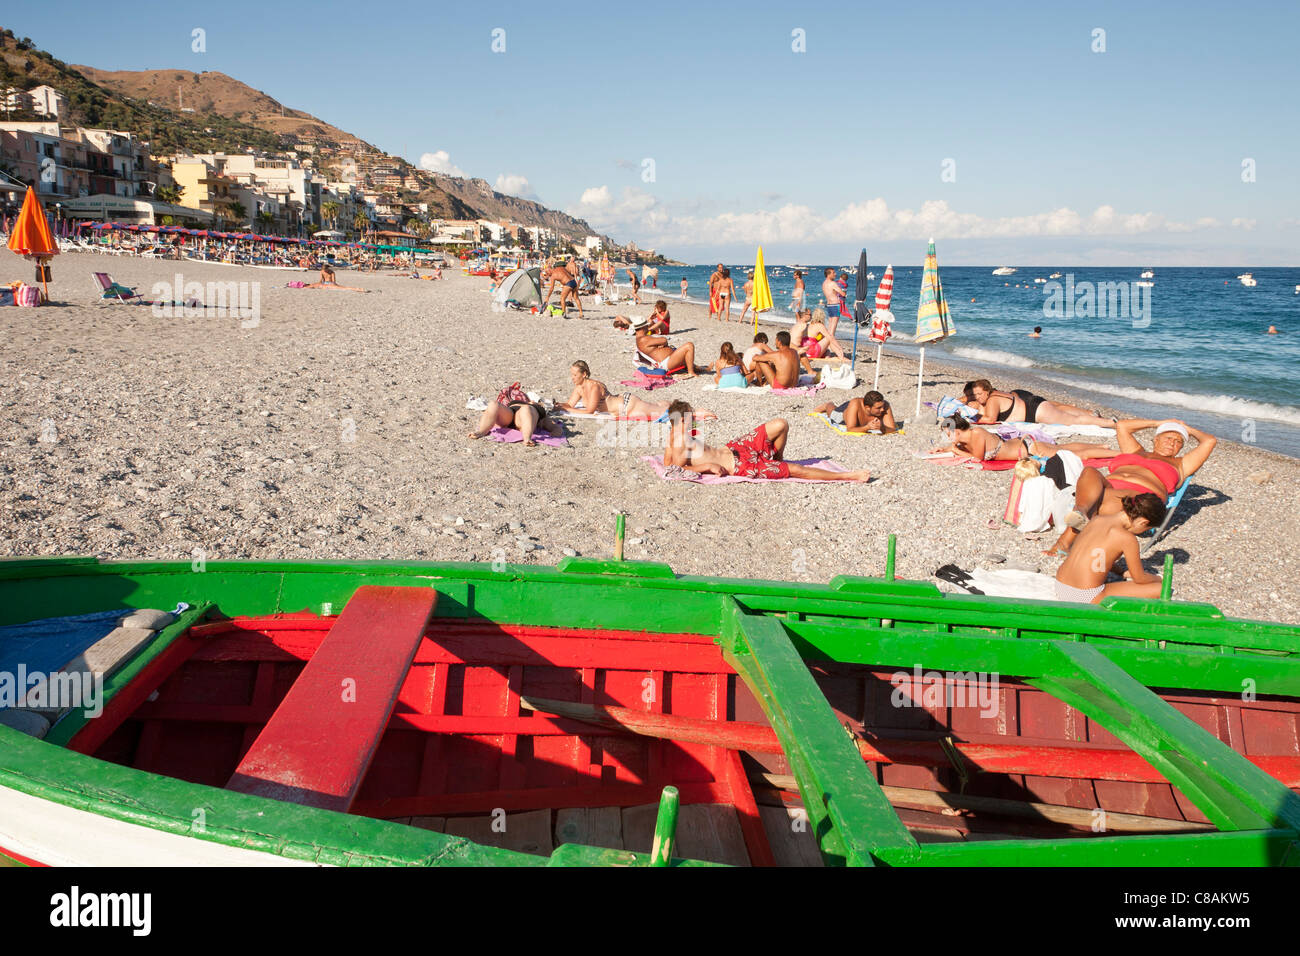 Tourists sunbathing, Letojanni Beach, Letojanni, Sicily, Italy Stock Photo